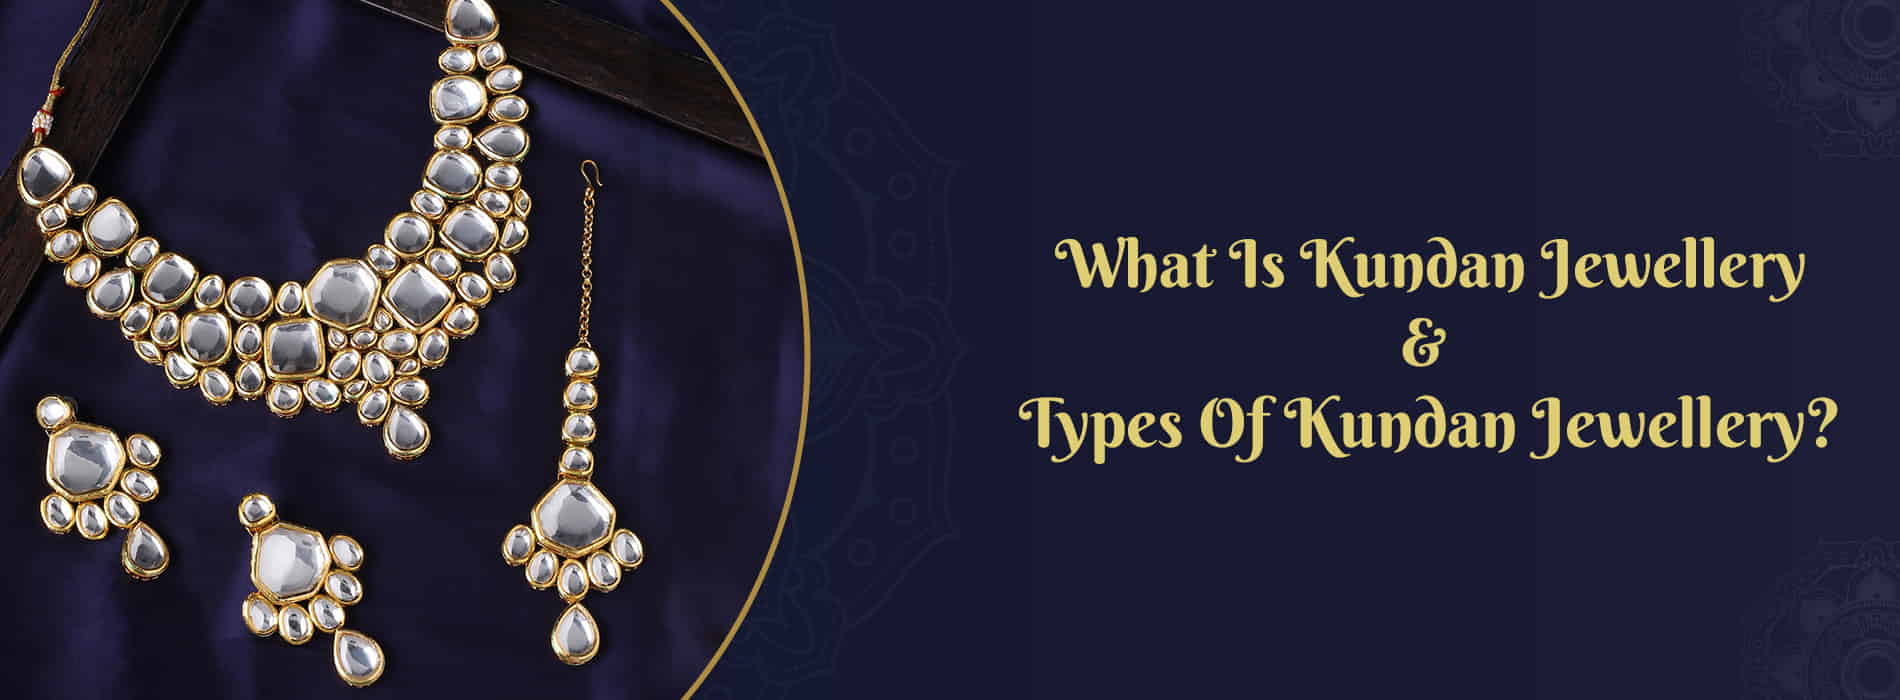 What is Kundan Jewellery and Types of Kundan Jewellery?